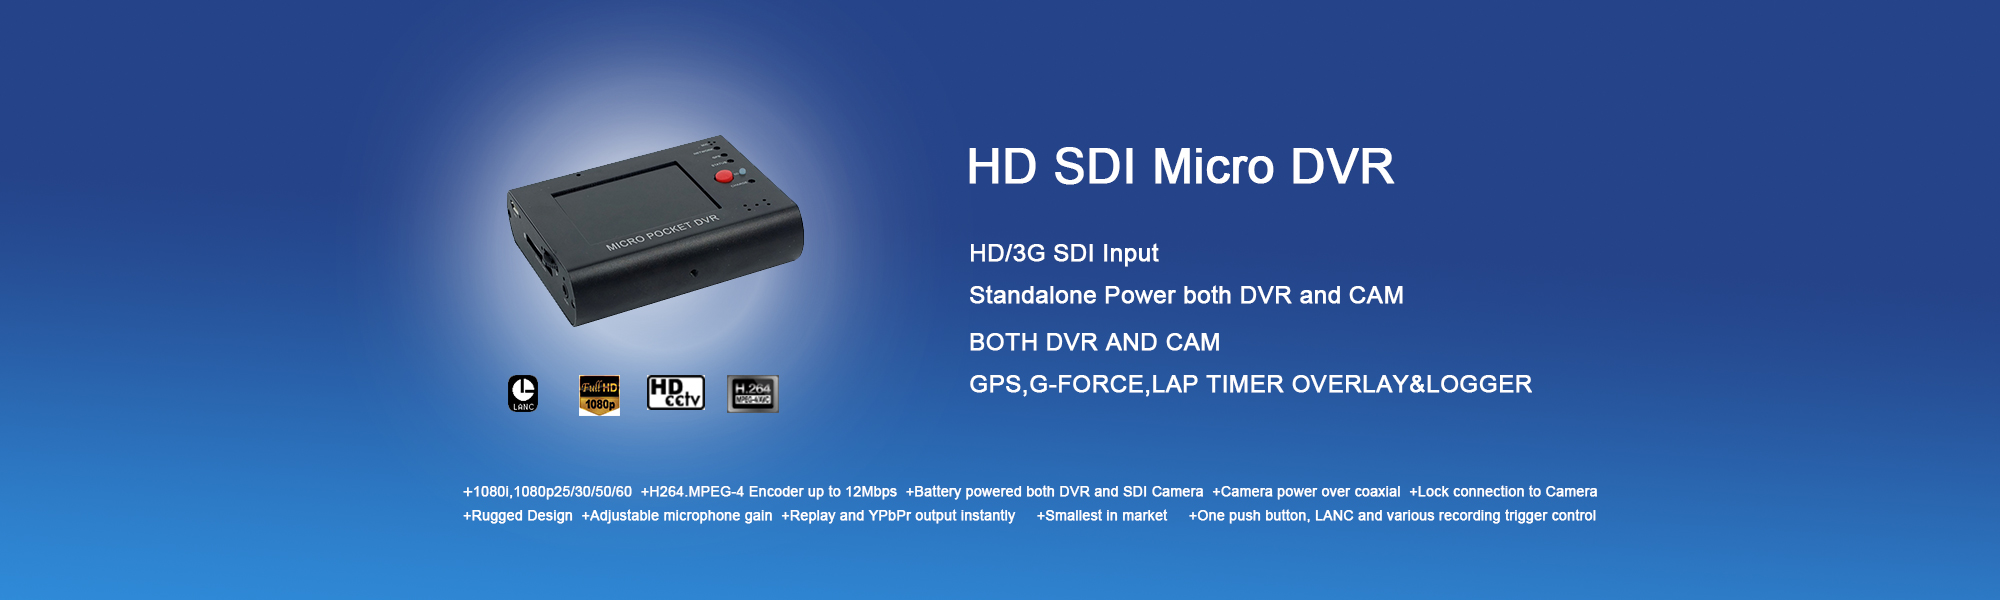 HD SDI Micro DVR